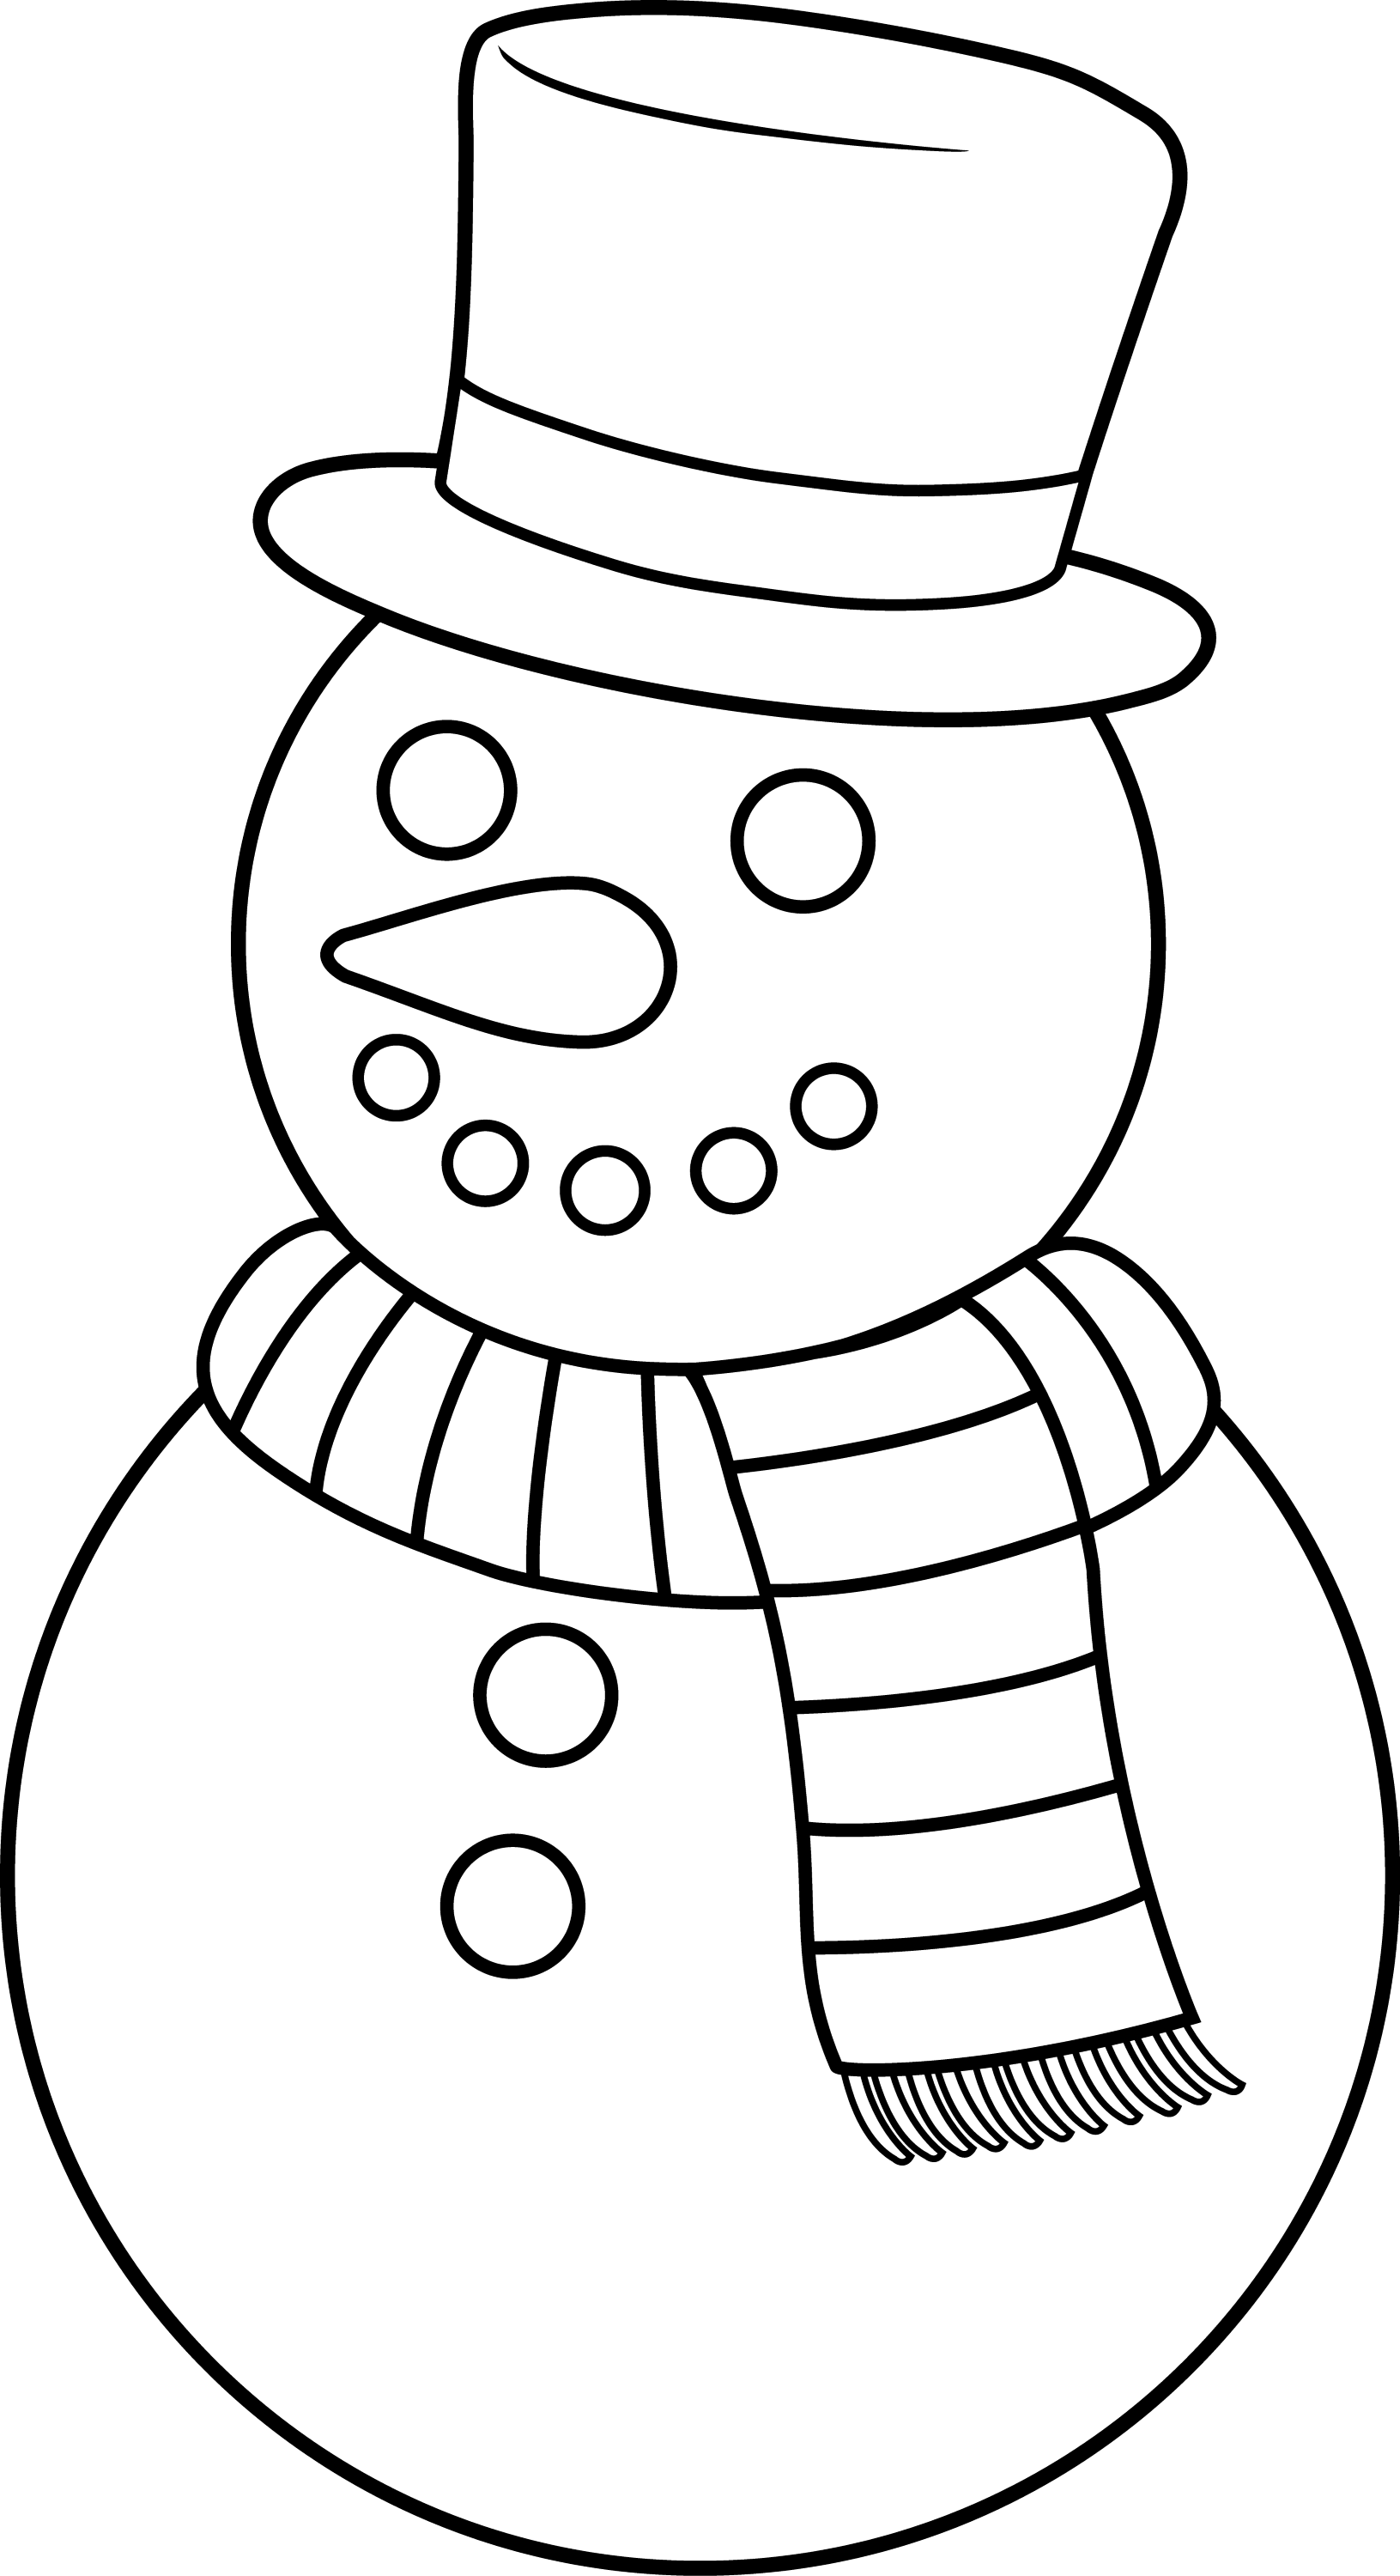 snowman-outline-new-calendar-template-site